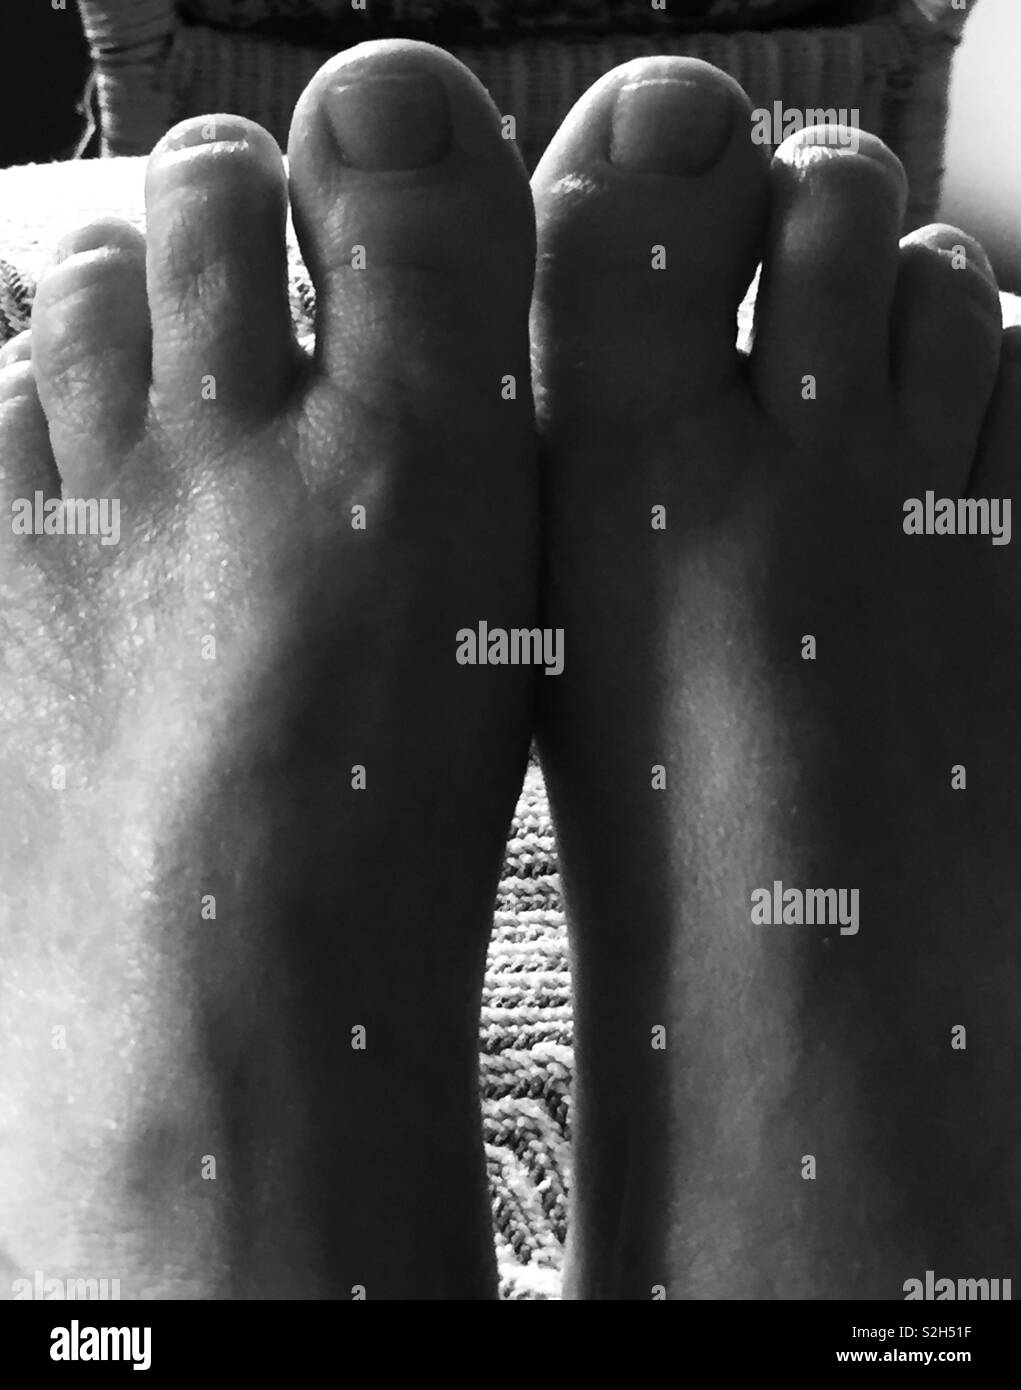 Feet resting noir Stock Photo